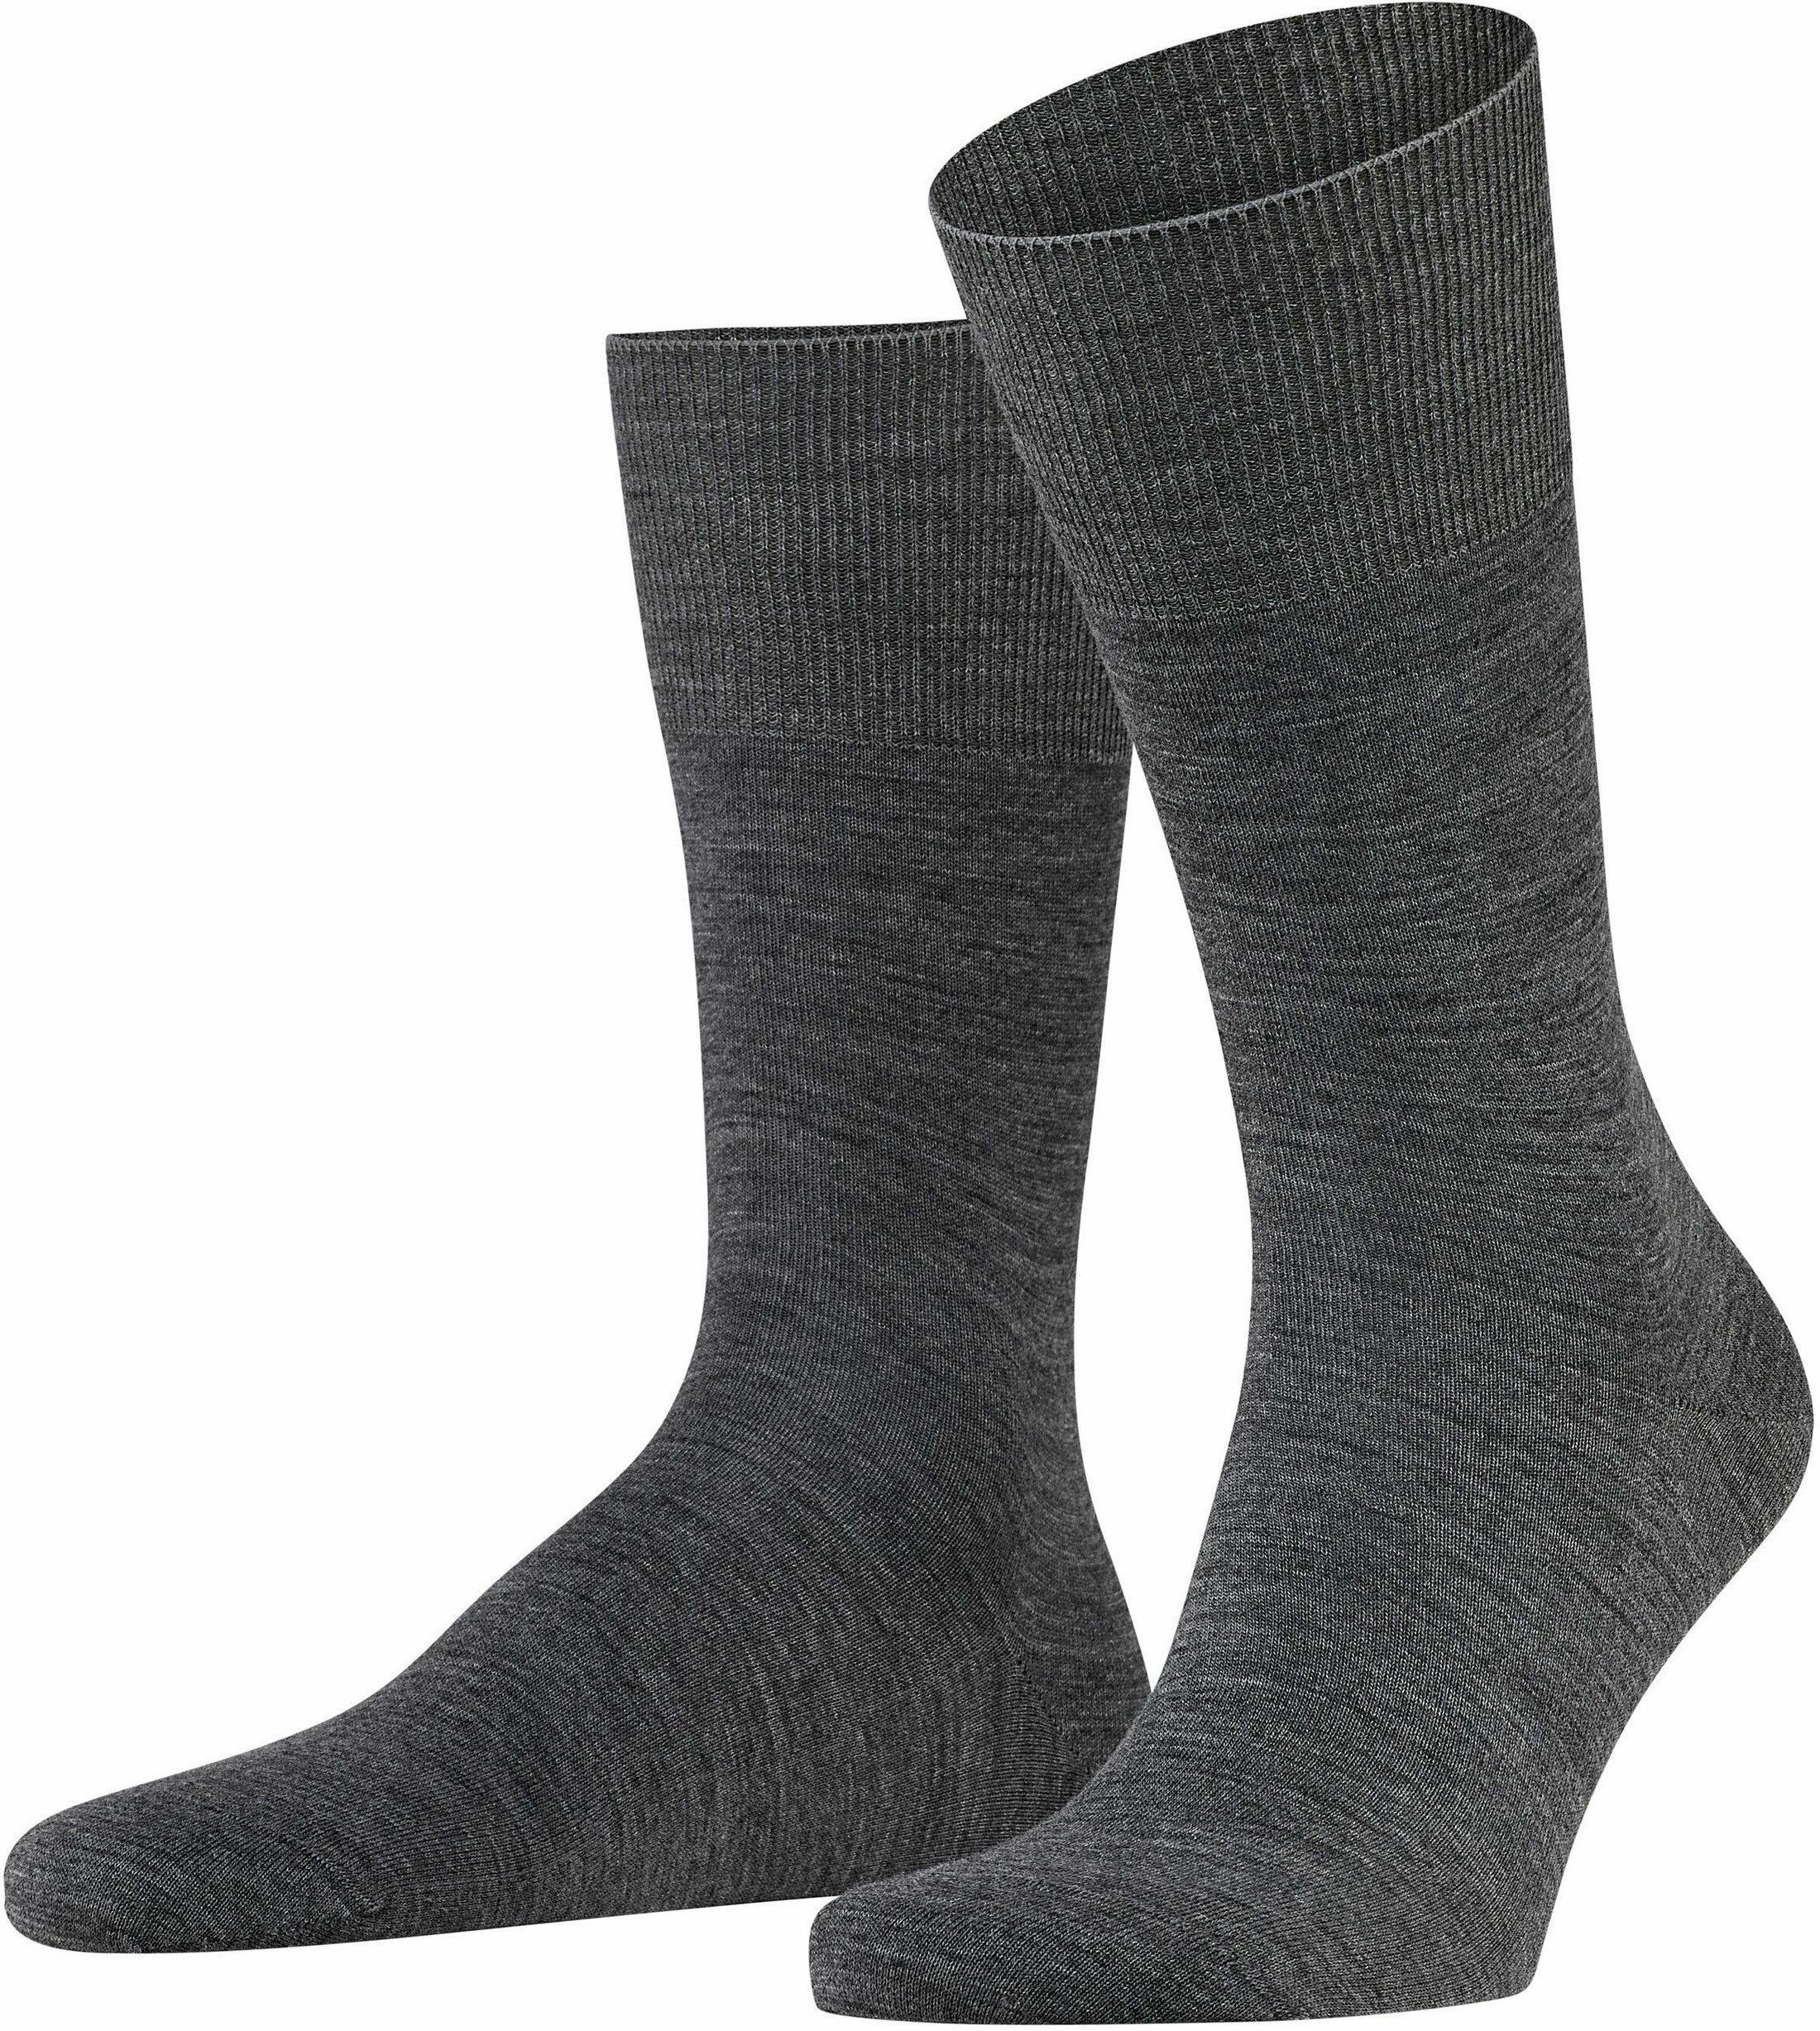 Falke Airport Socks 3070 Grey size 39-40